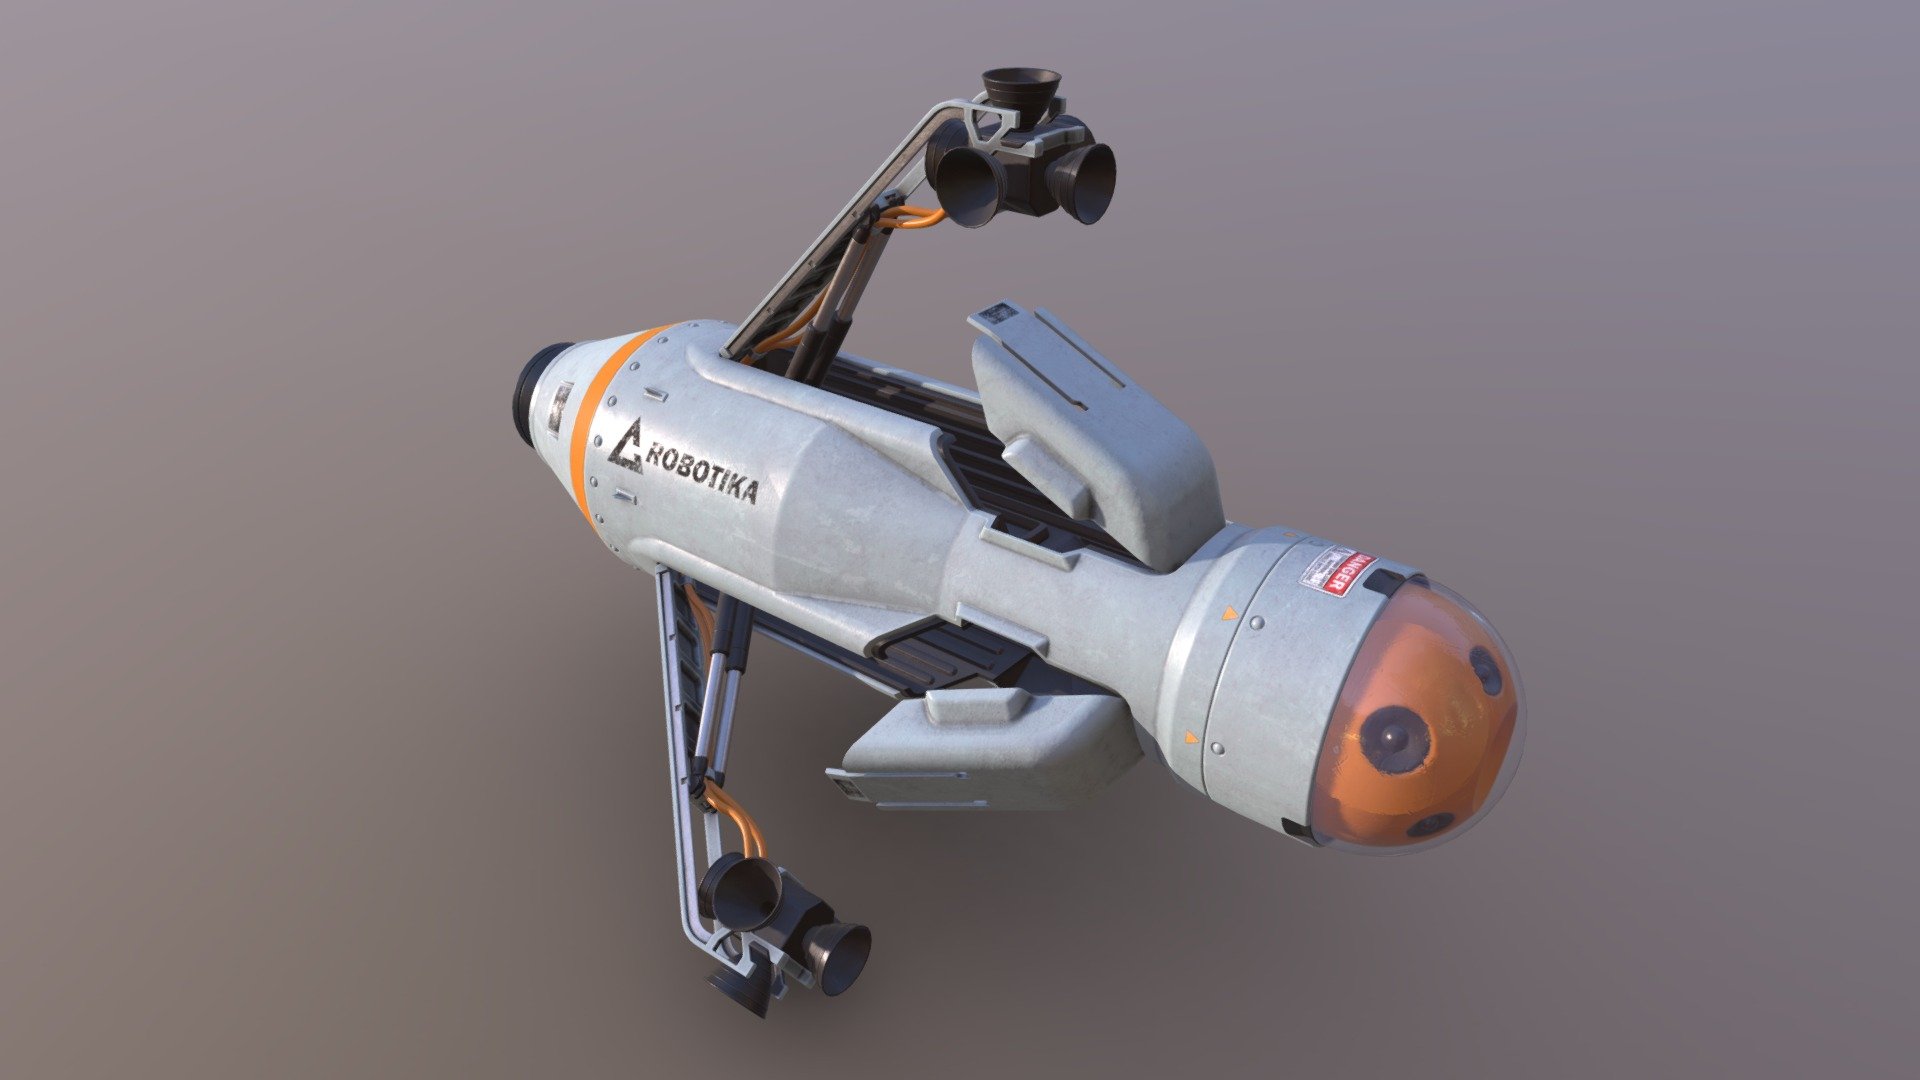 a probe / missile made to operate in space.
Link to renders and short animation: https://www.artstation.com/artwork/8e0XDm - Spaceprobe - Buy Royalty Free 3D model by Jonas Prunskus (@JPrun) 3d model